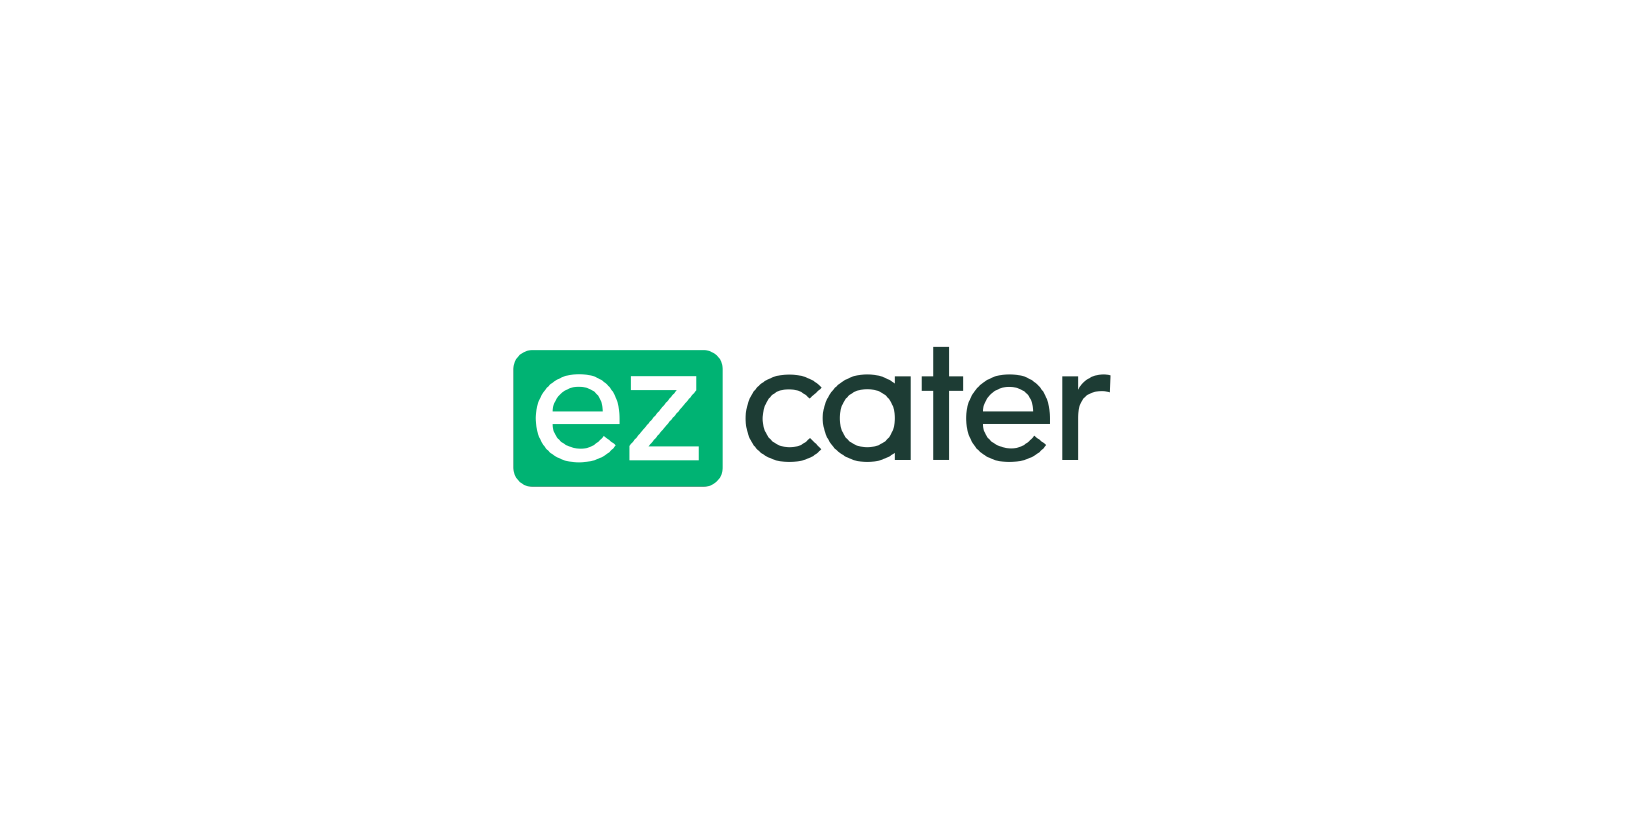 Vision Fund investment portfolio company ezCater's logo